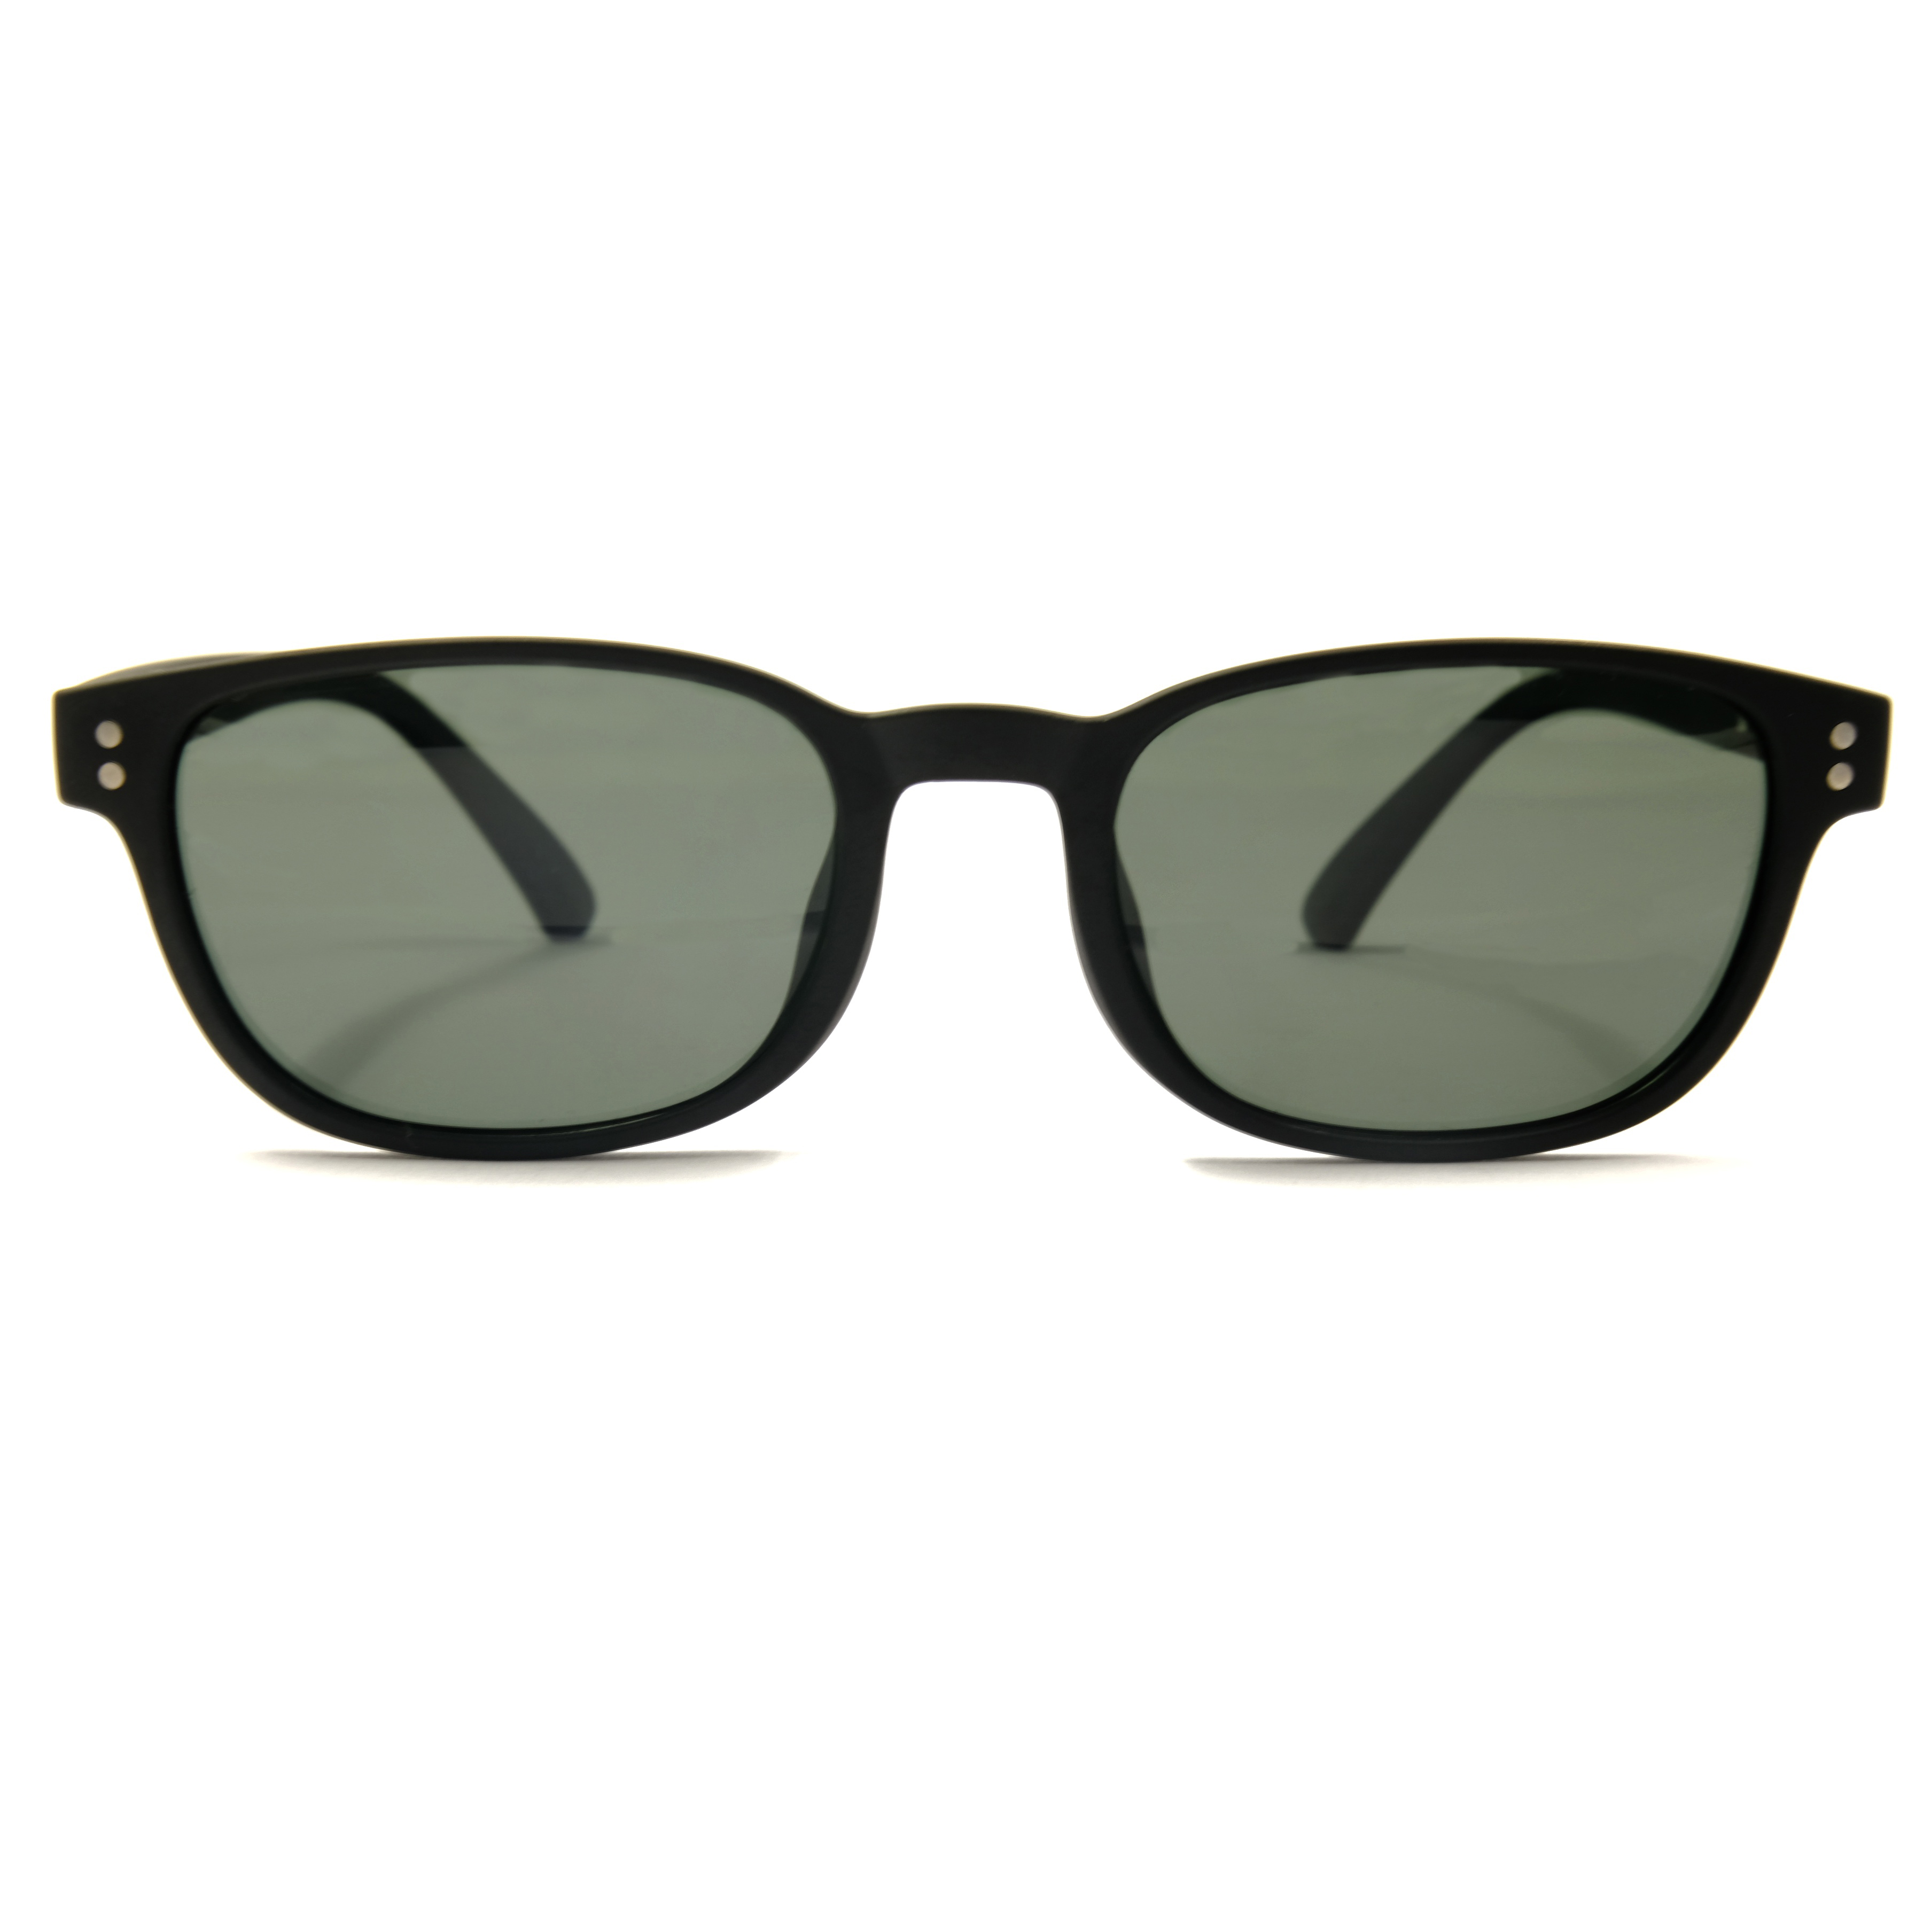 Polarized sunglasses doflamingo glasses Fashion shades sunglasses 2021 man black mirror blu ray sunglasses for men